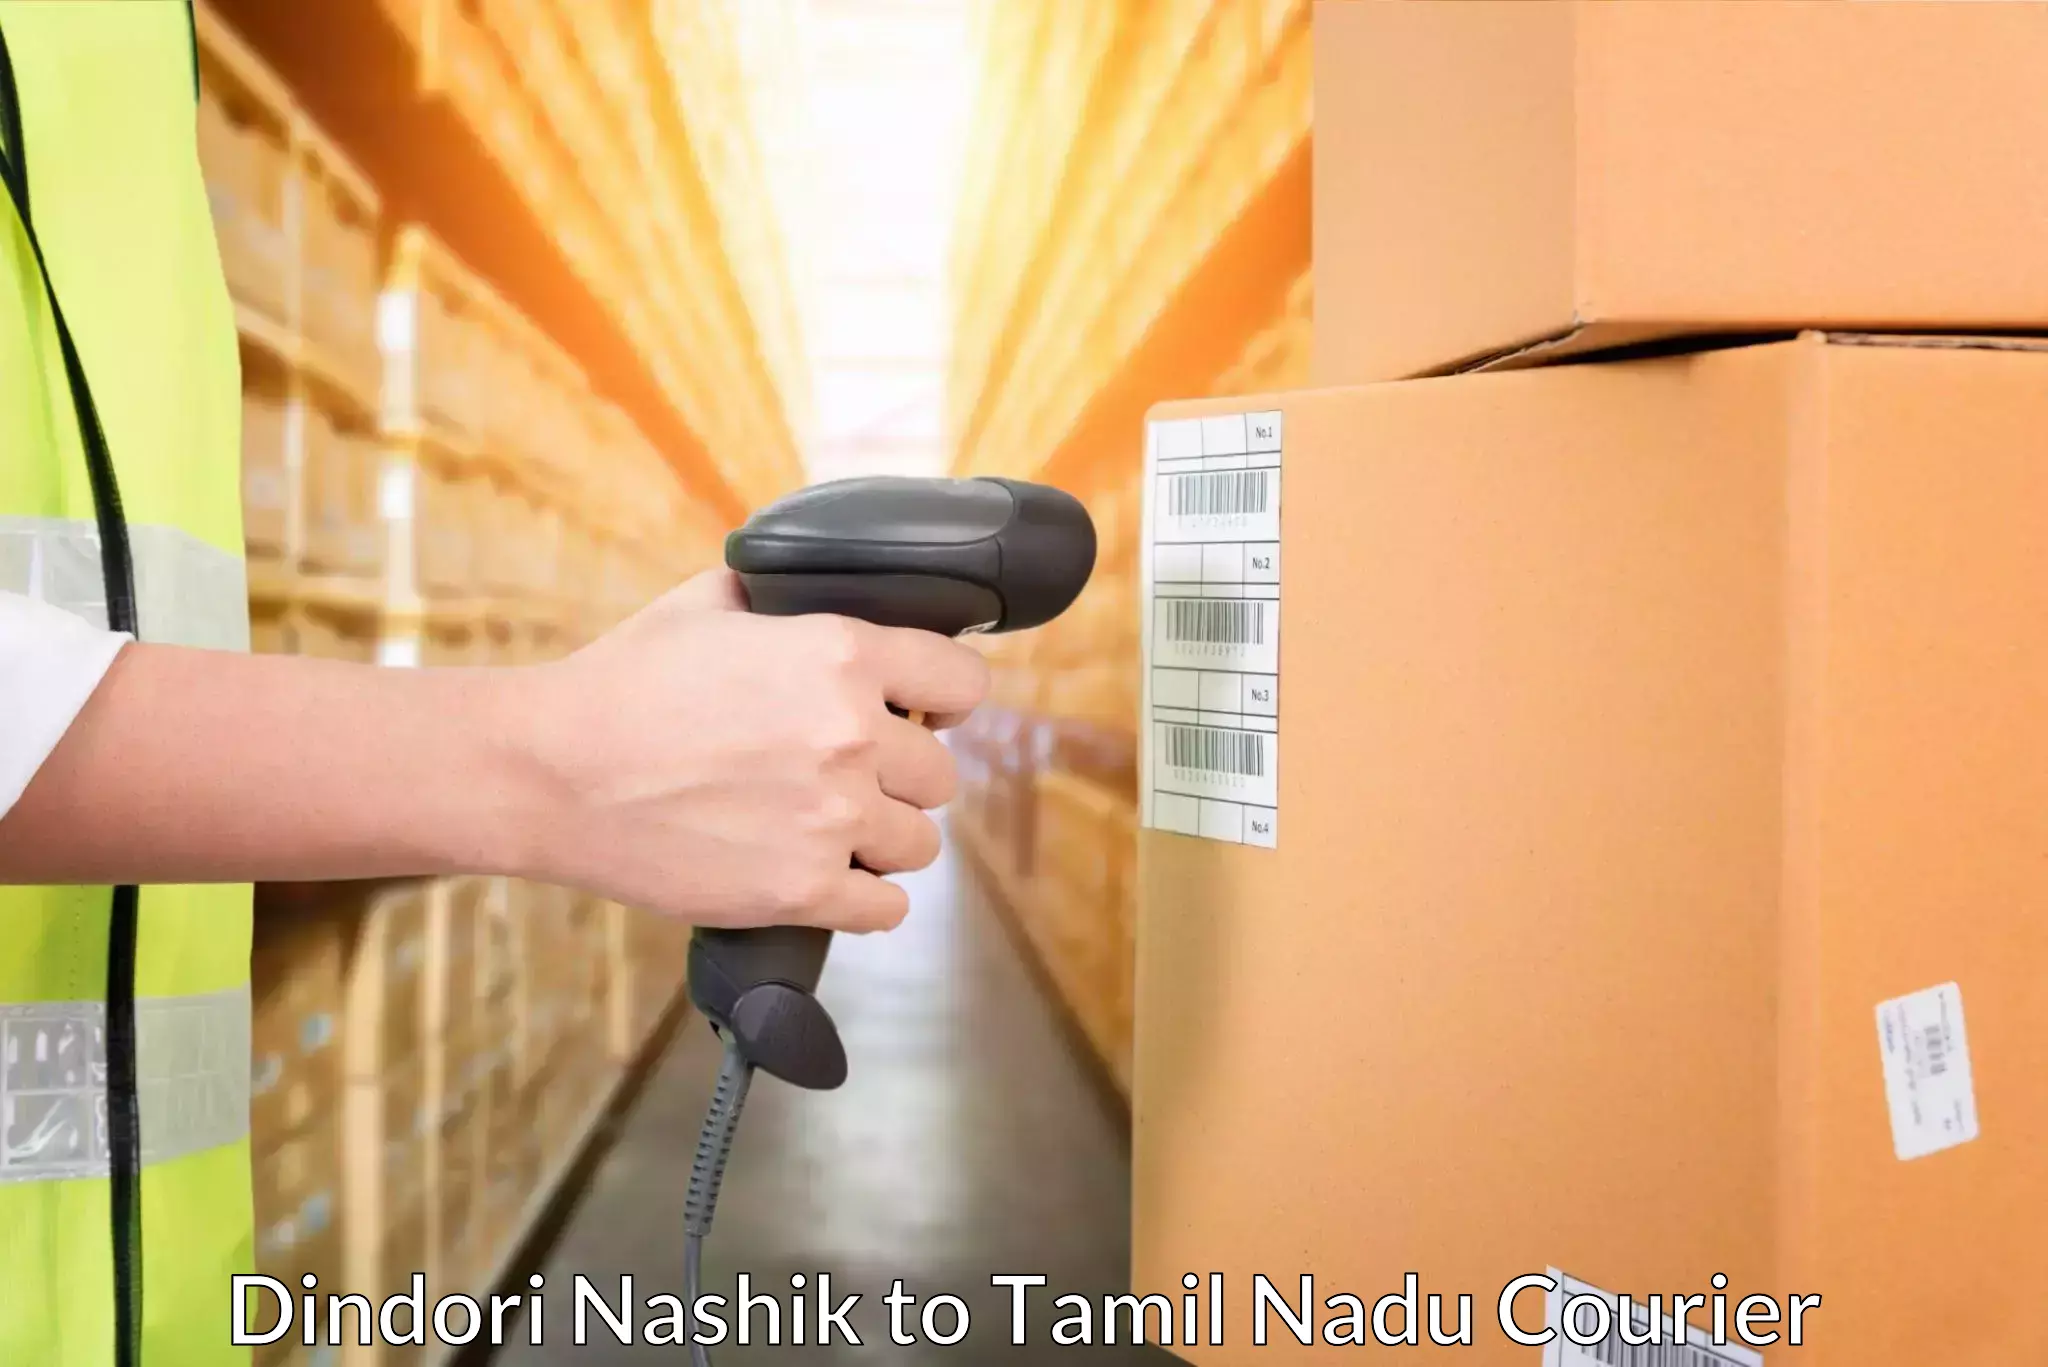 On-call courier service Dindori Nashik to Sivaganga